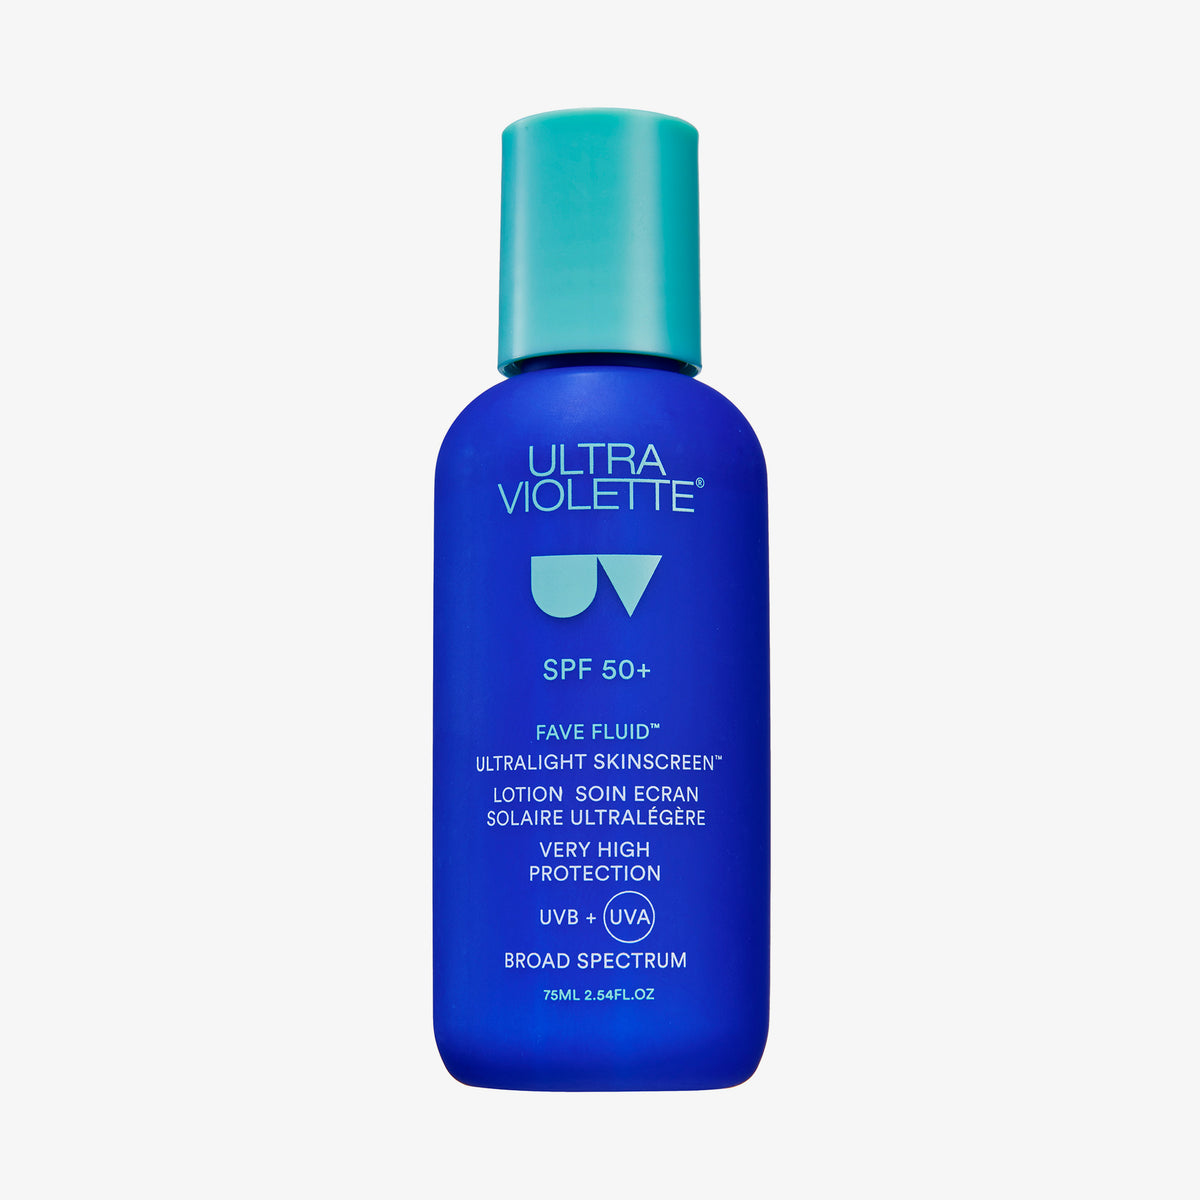 Ultra Violette | Fave Fluid SPF50+ Lightweight Fragrance-Free Skinscreen